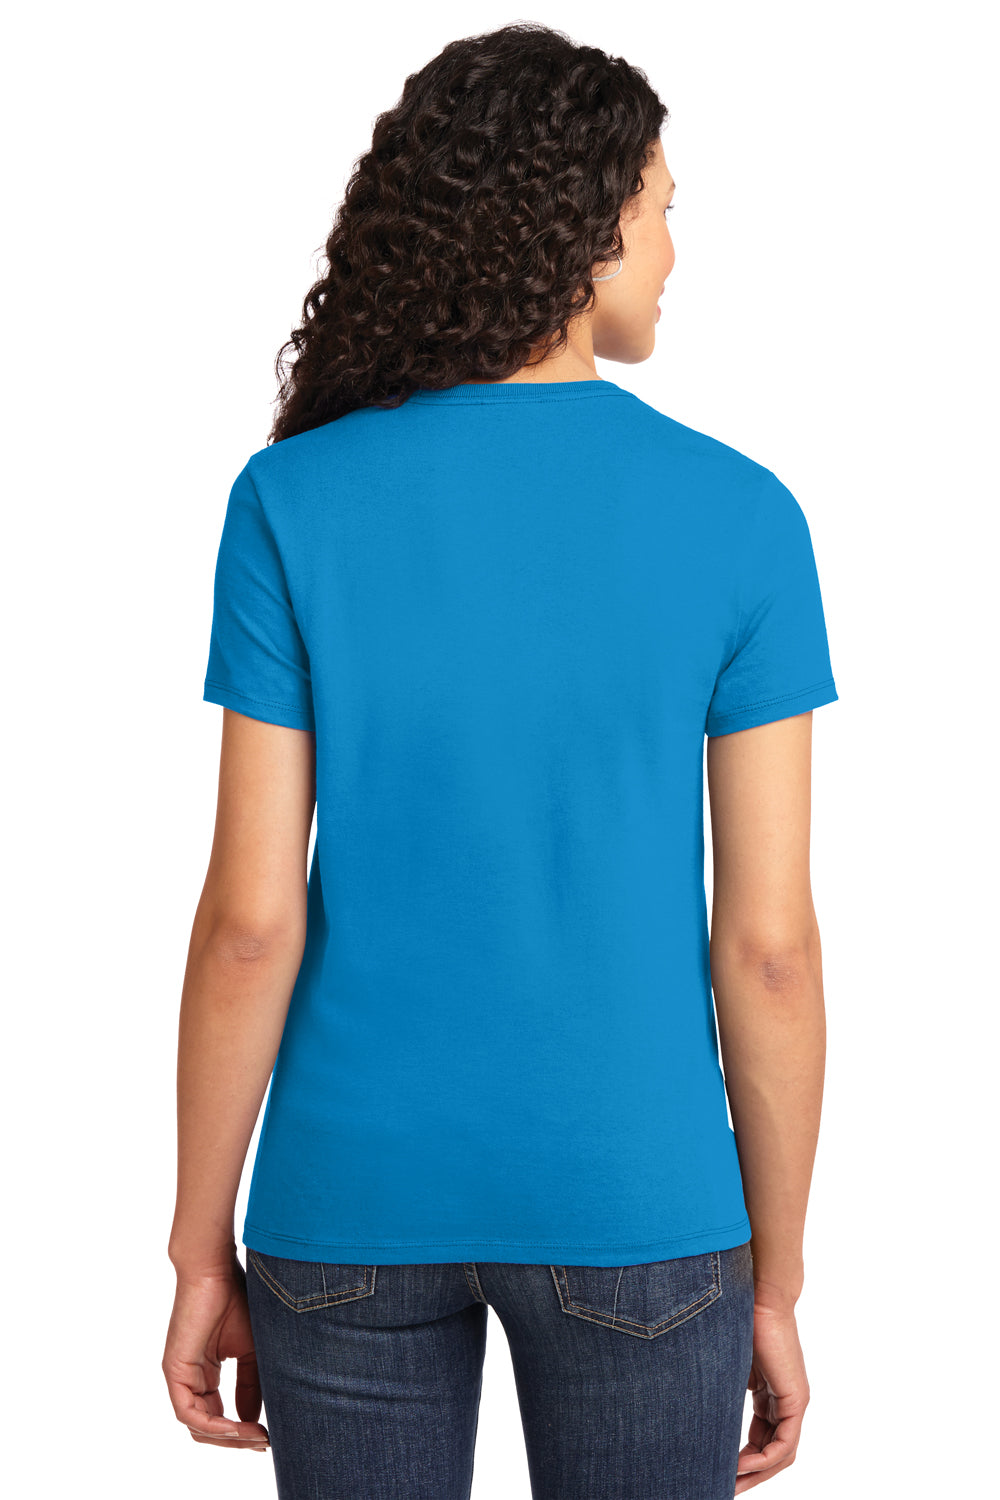 Port & Company LPC61 Womens Essential Short Sleeve Crewneck T-Shirt Sapphire Blue Back